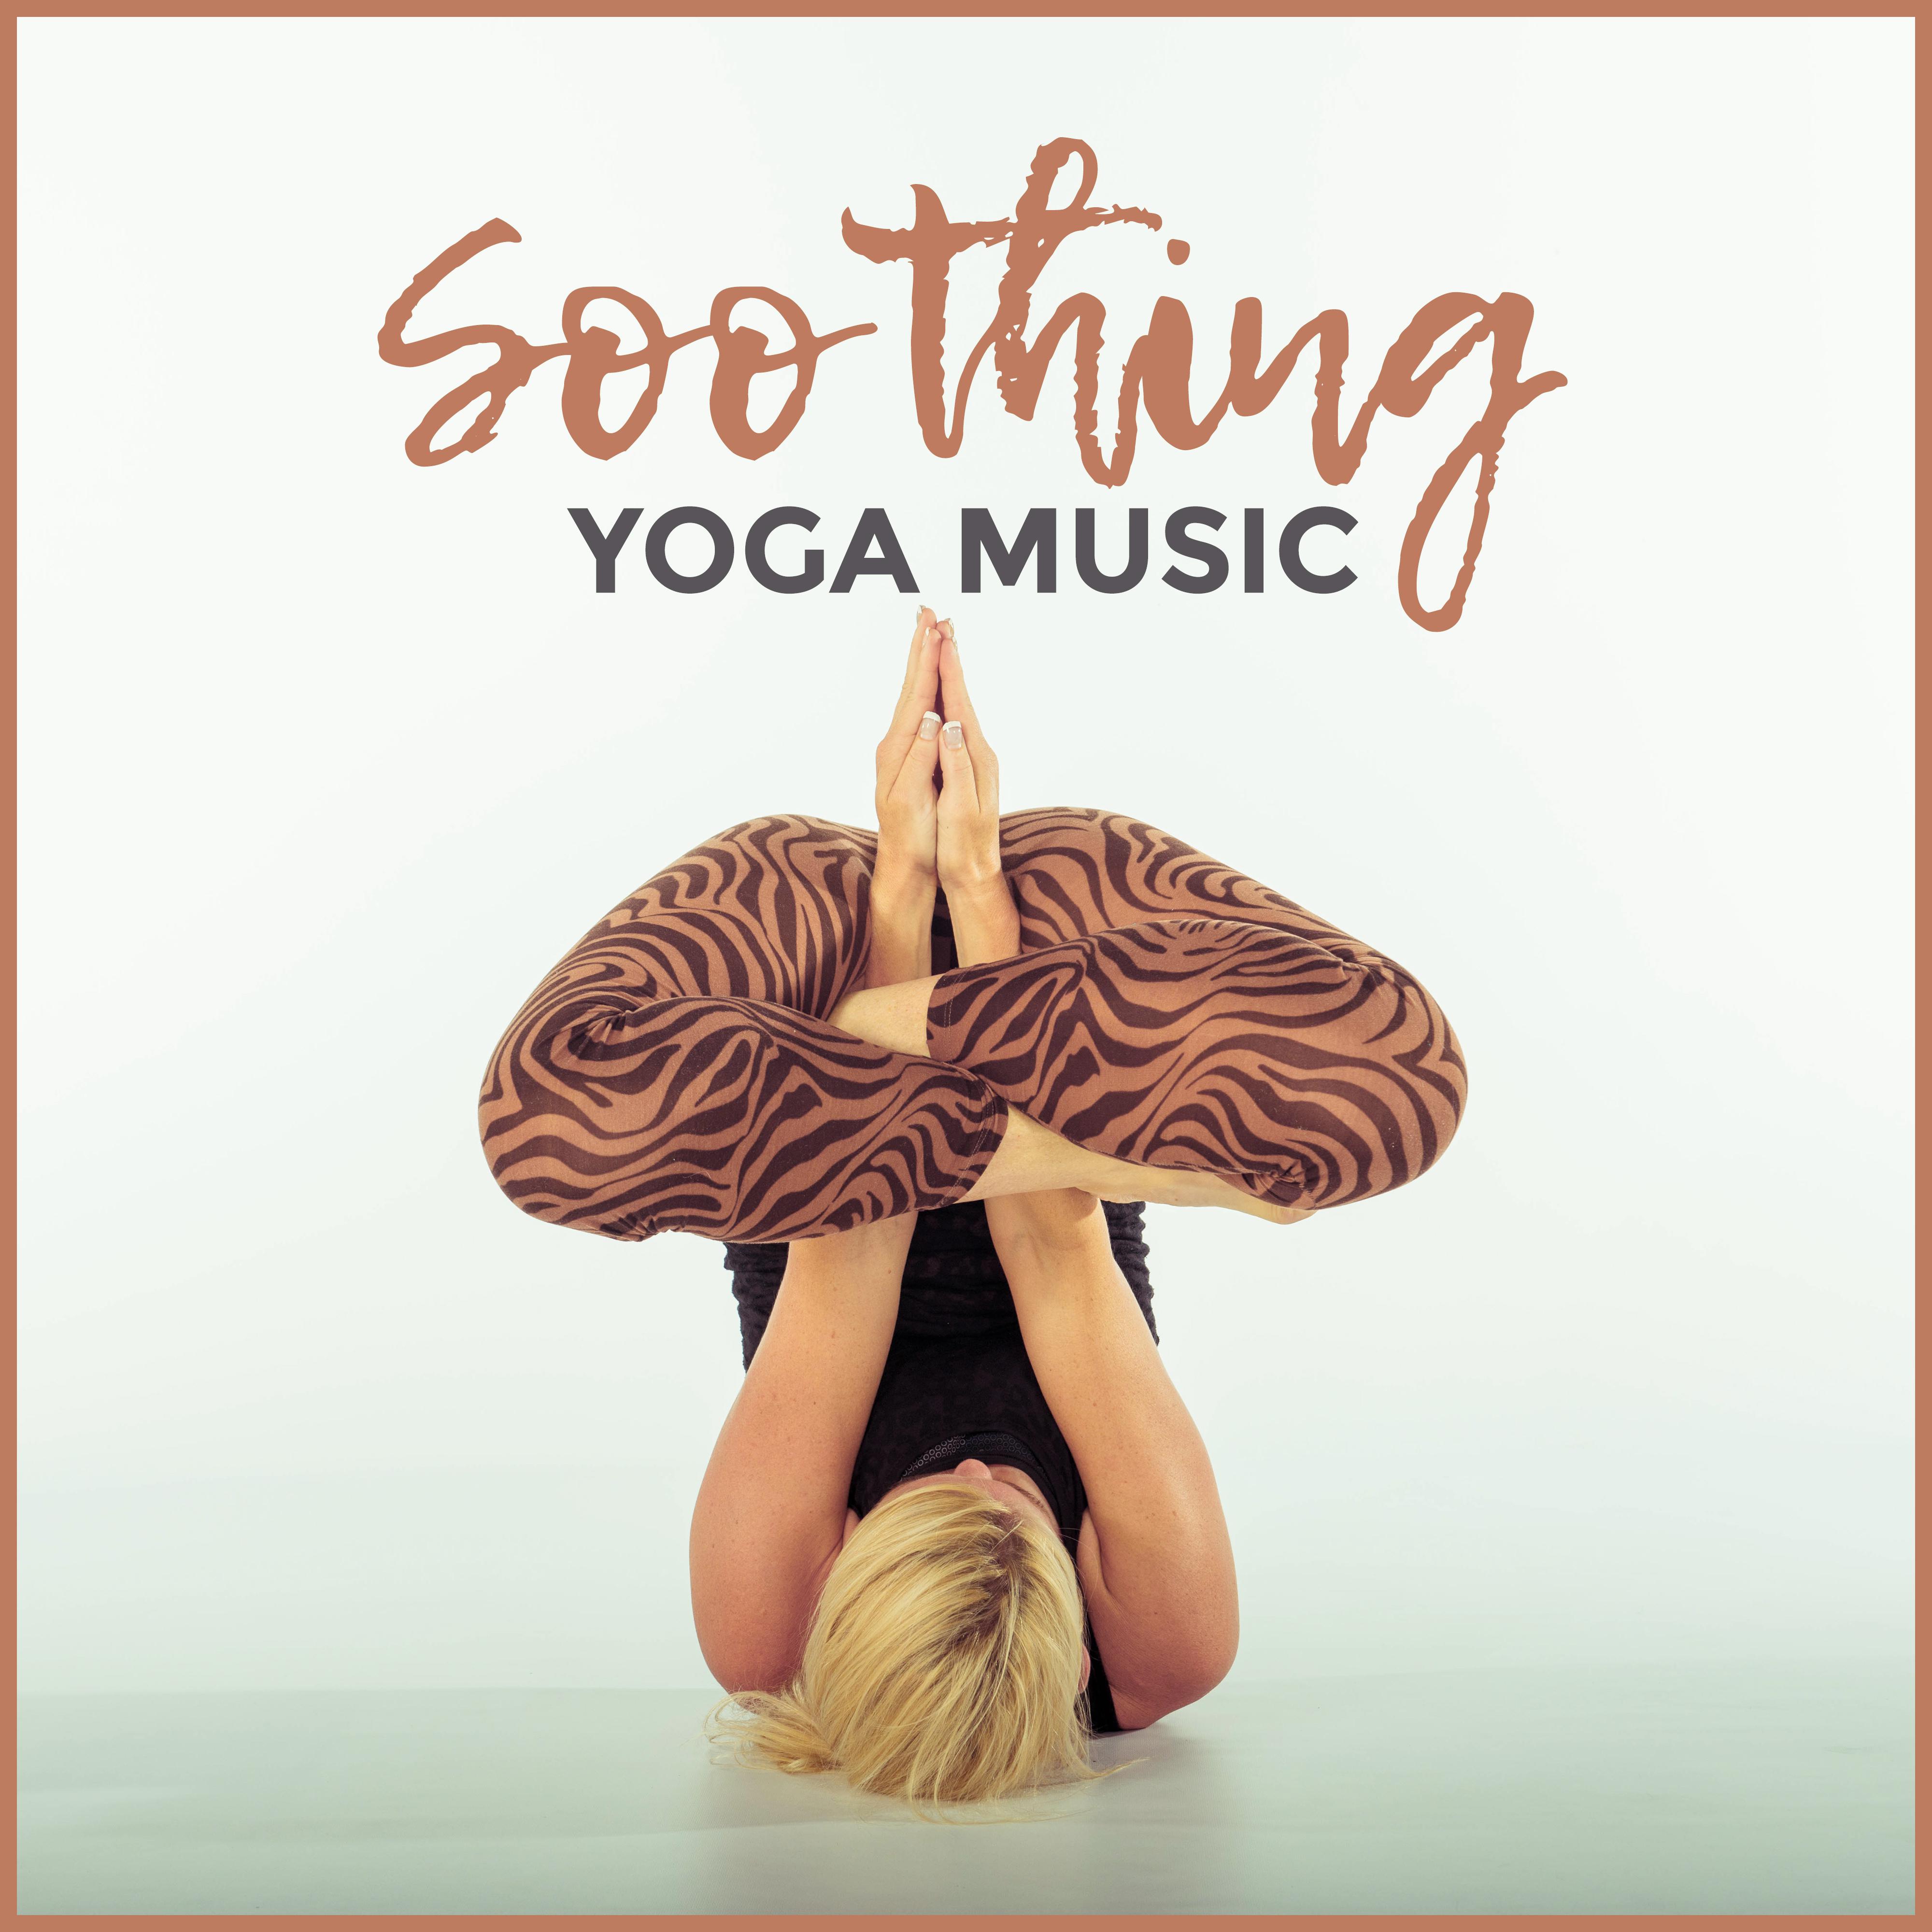 Soothing Yoga Music